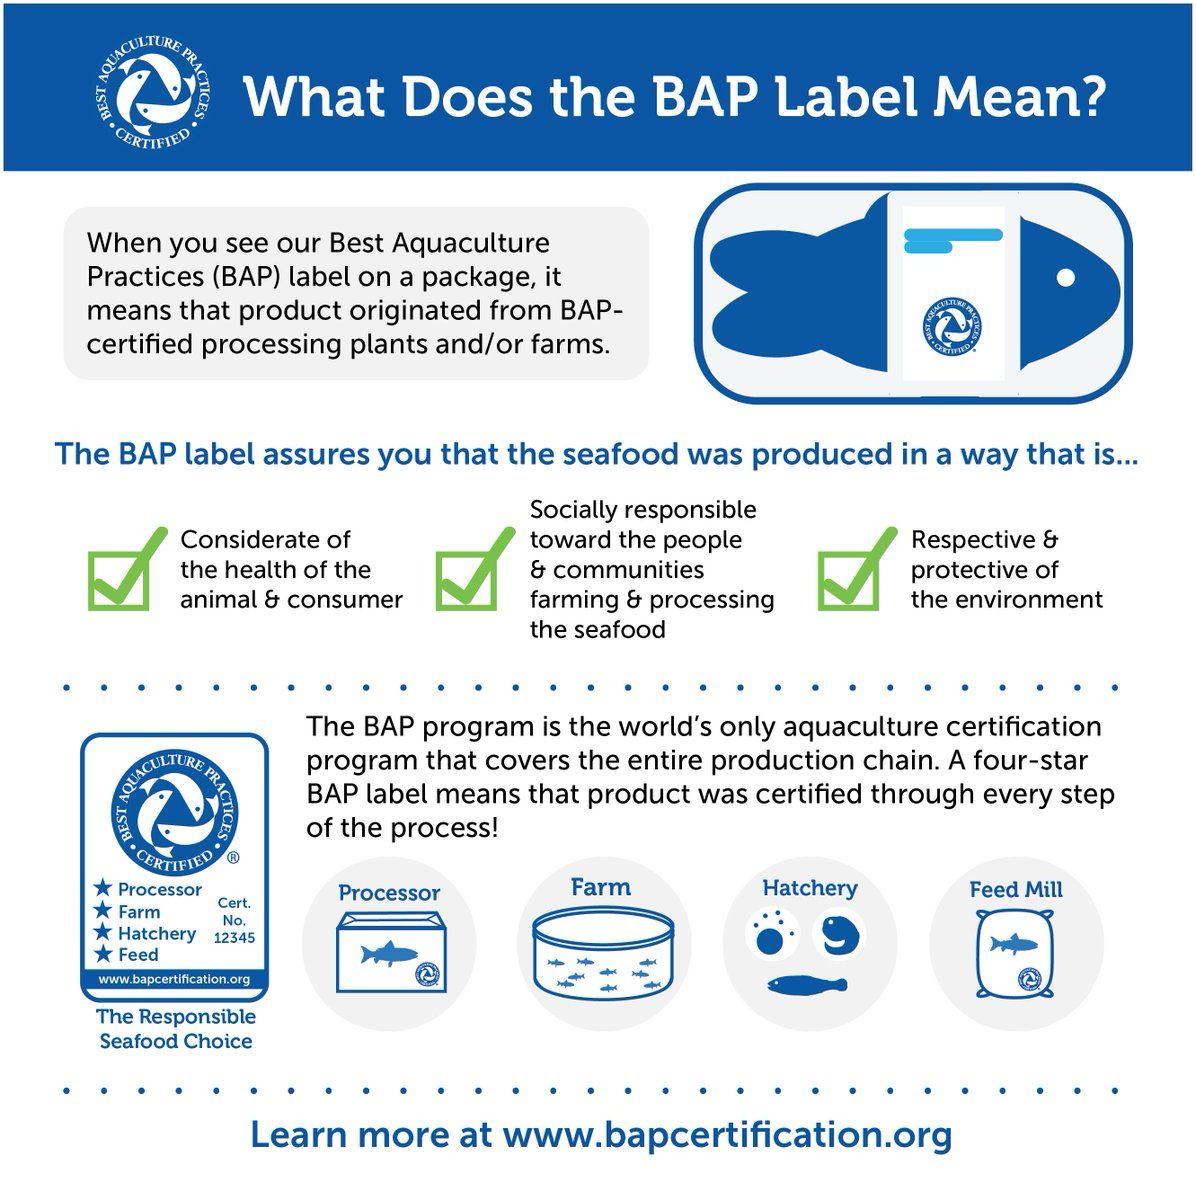 4 Star Bap Logo - BAP Certification You See A BAP Four Star Label